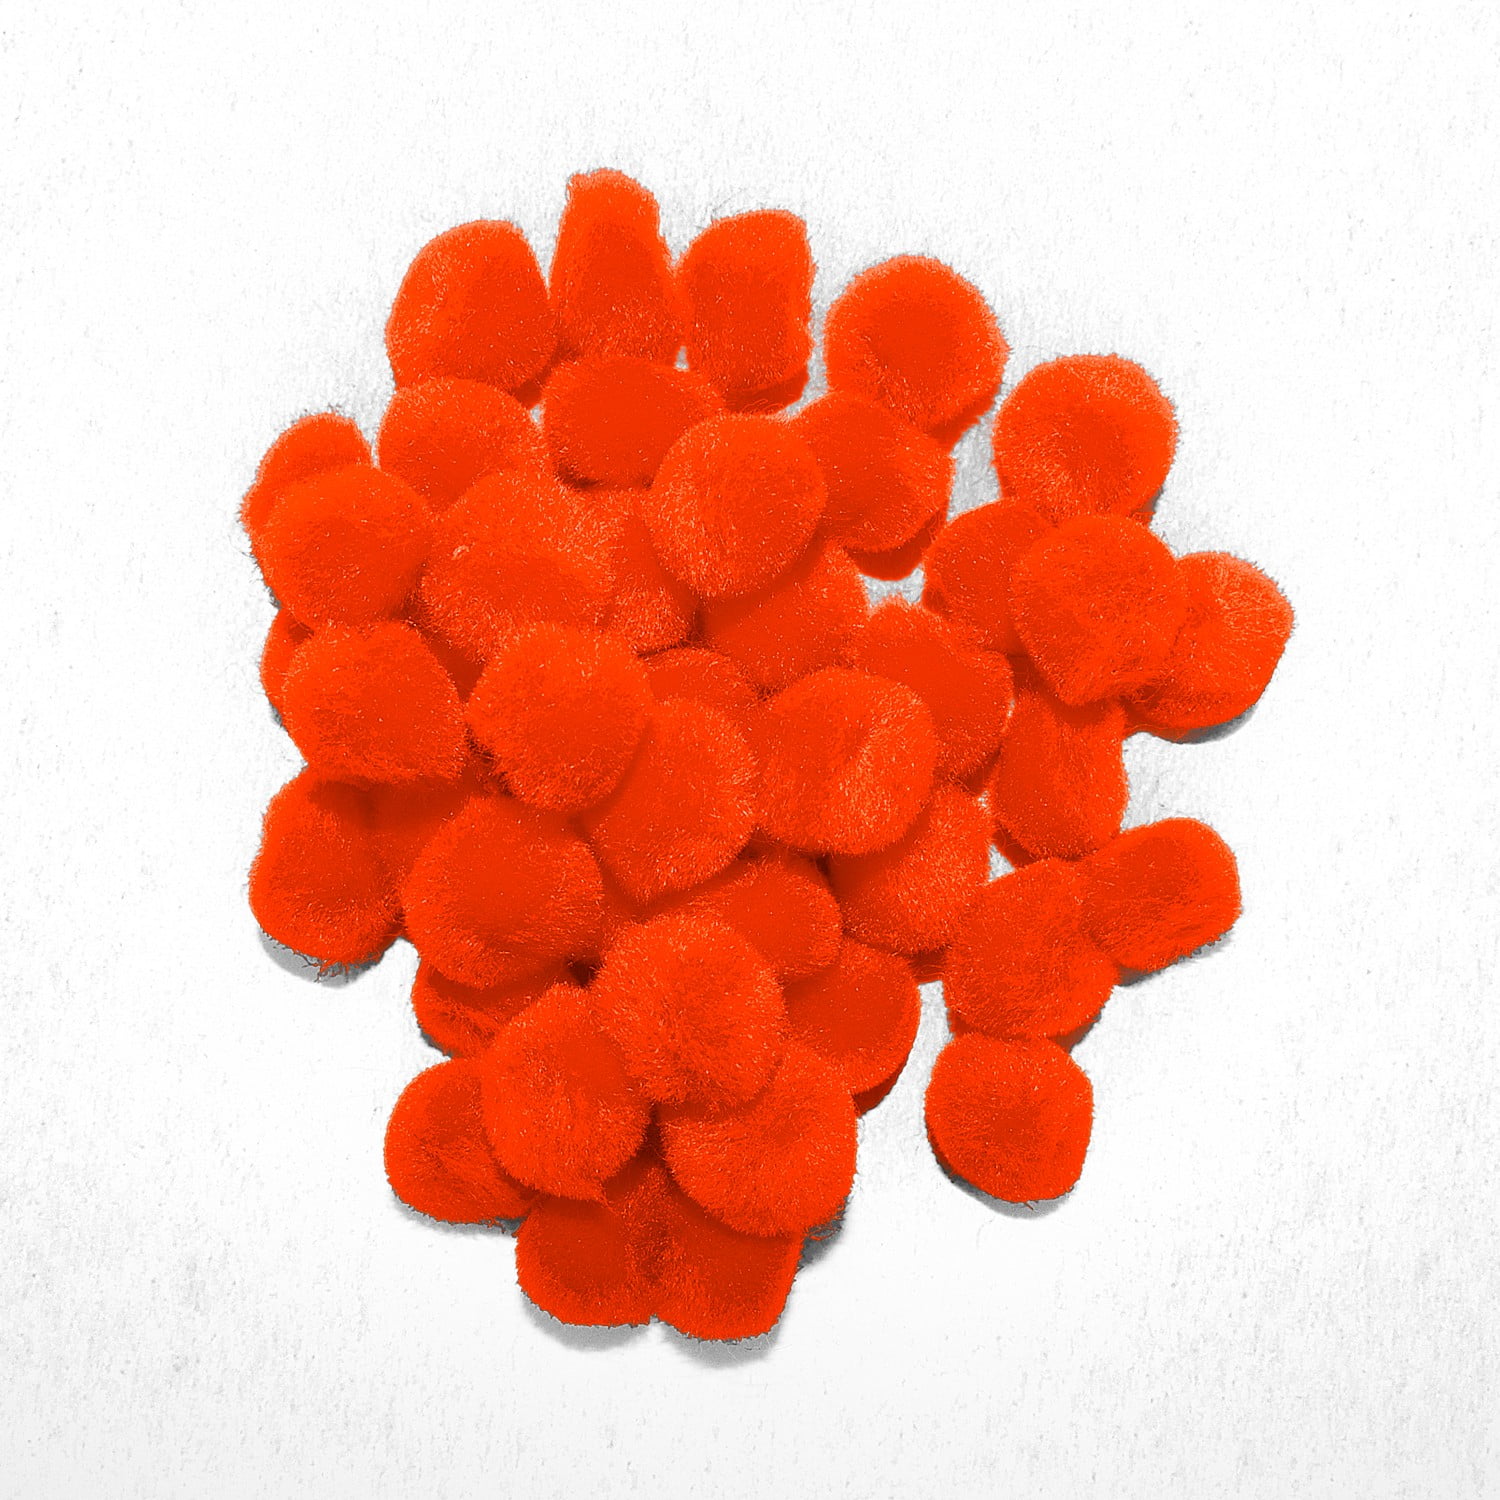 Express puls dukke 0.75 inch Orange Mini Craft Pom Poms 100 Pieces - Walmart.com